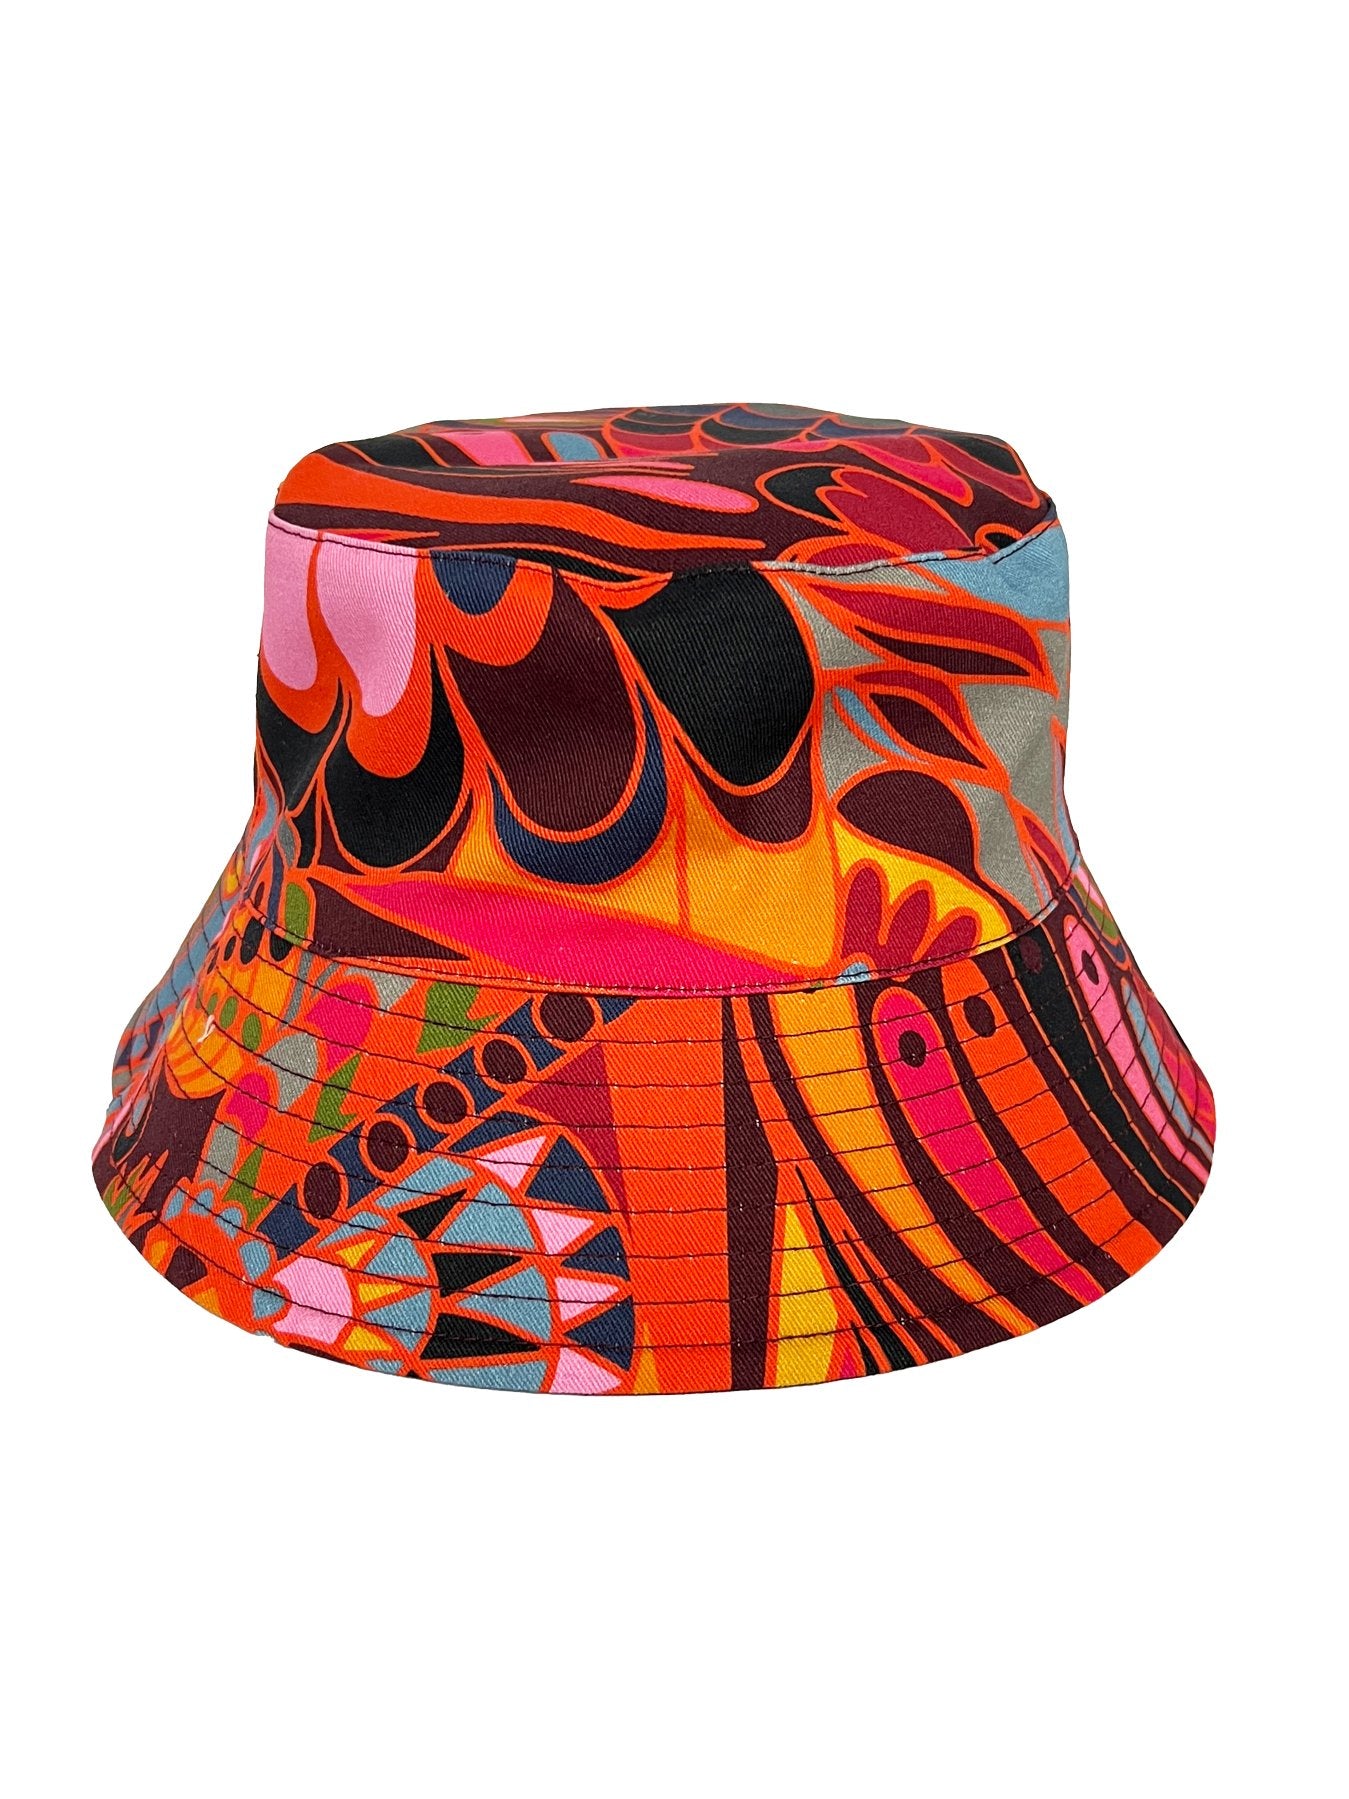 BERTA bucket hat Shakalaka Orange - Lesley Evers-23-HG100-W3-Best Seller-bucket hat